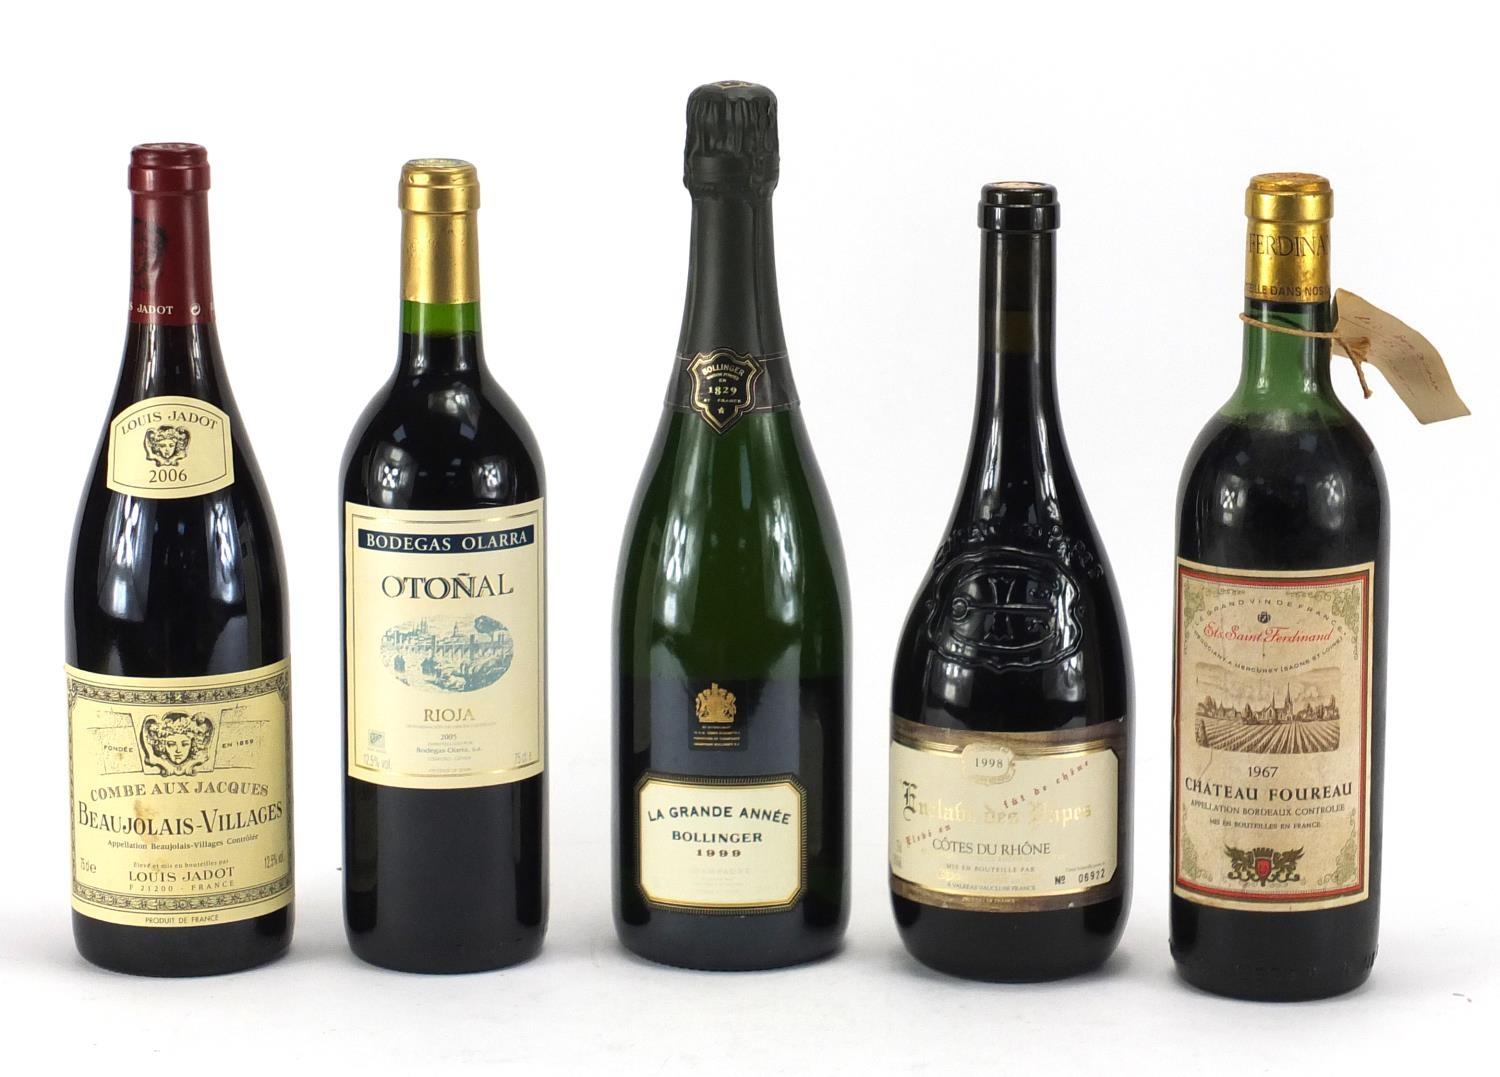 Four bottles of alcohol including a bottle of La Grande Année Bollinger 1999 and Chateau Foureau